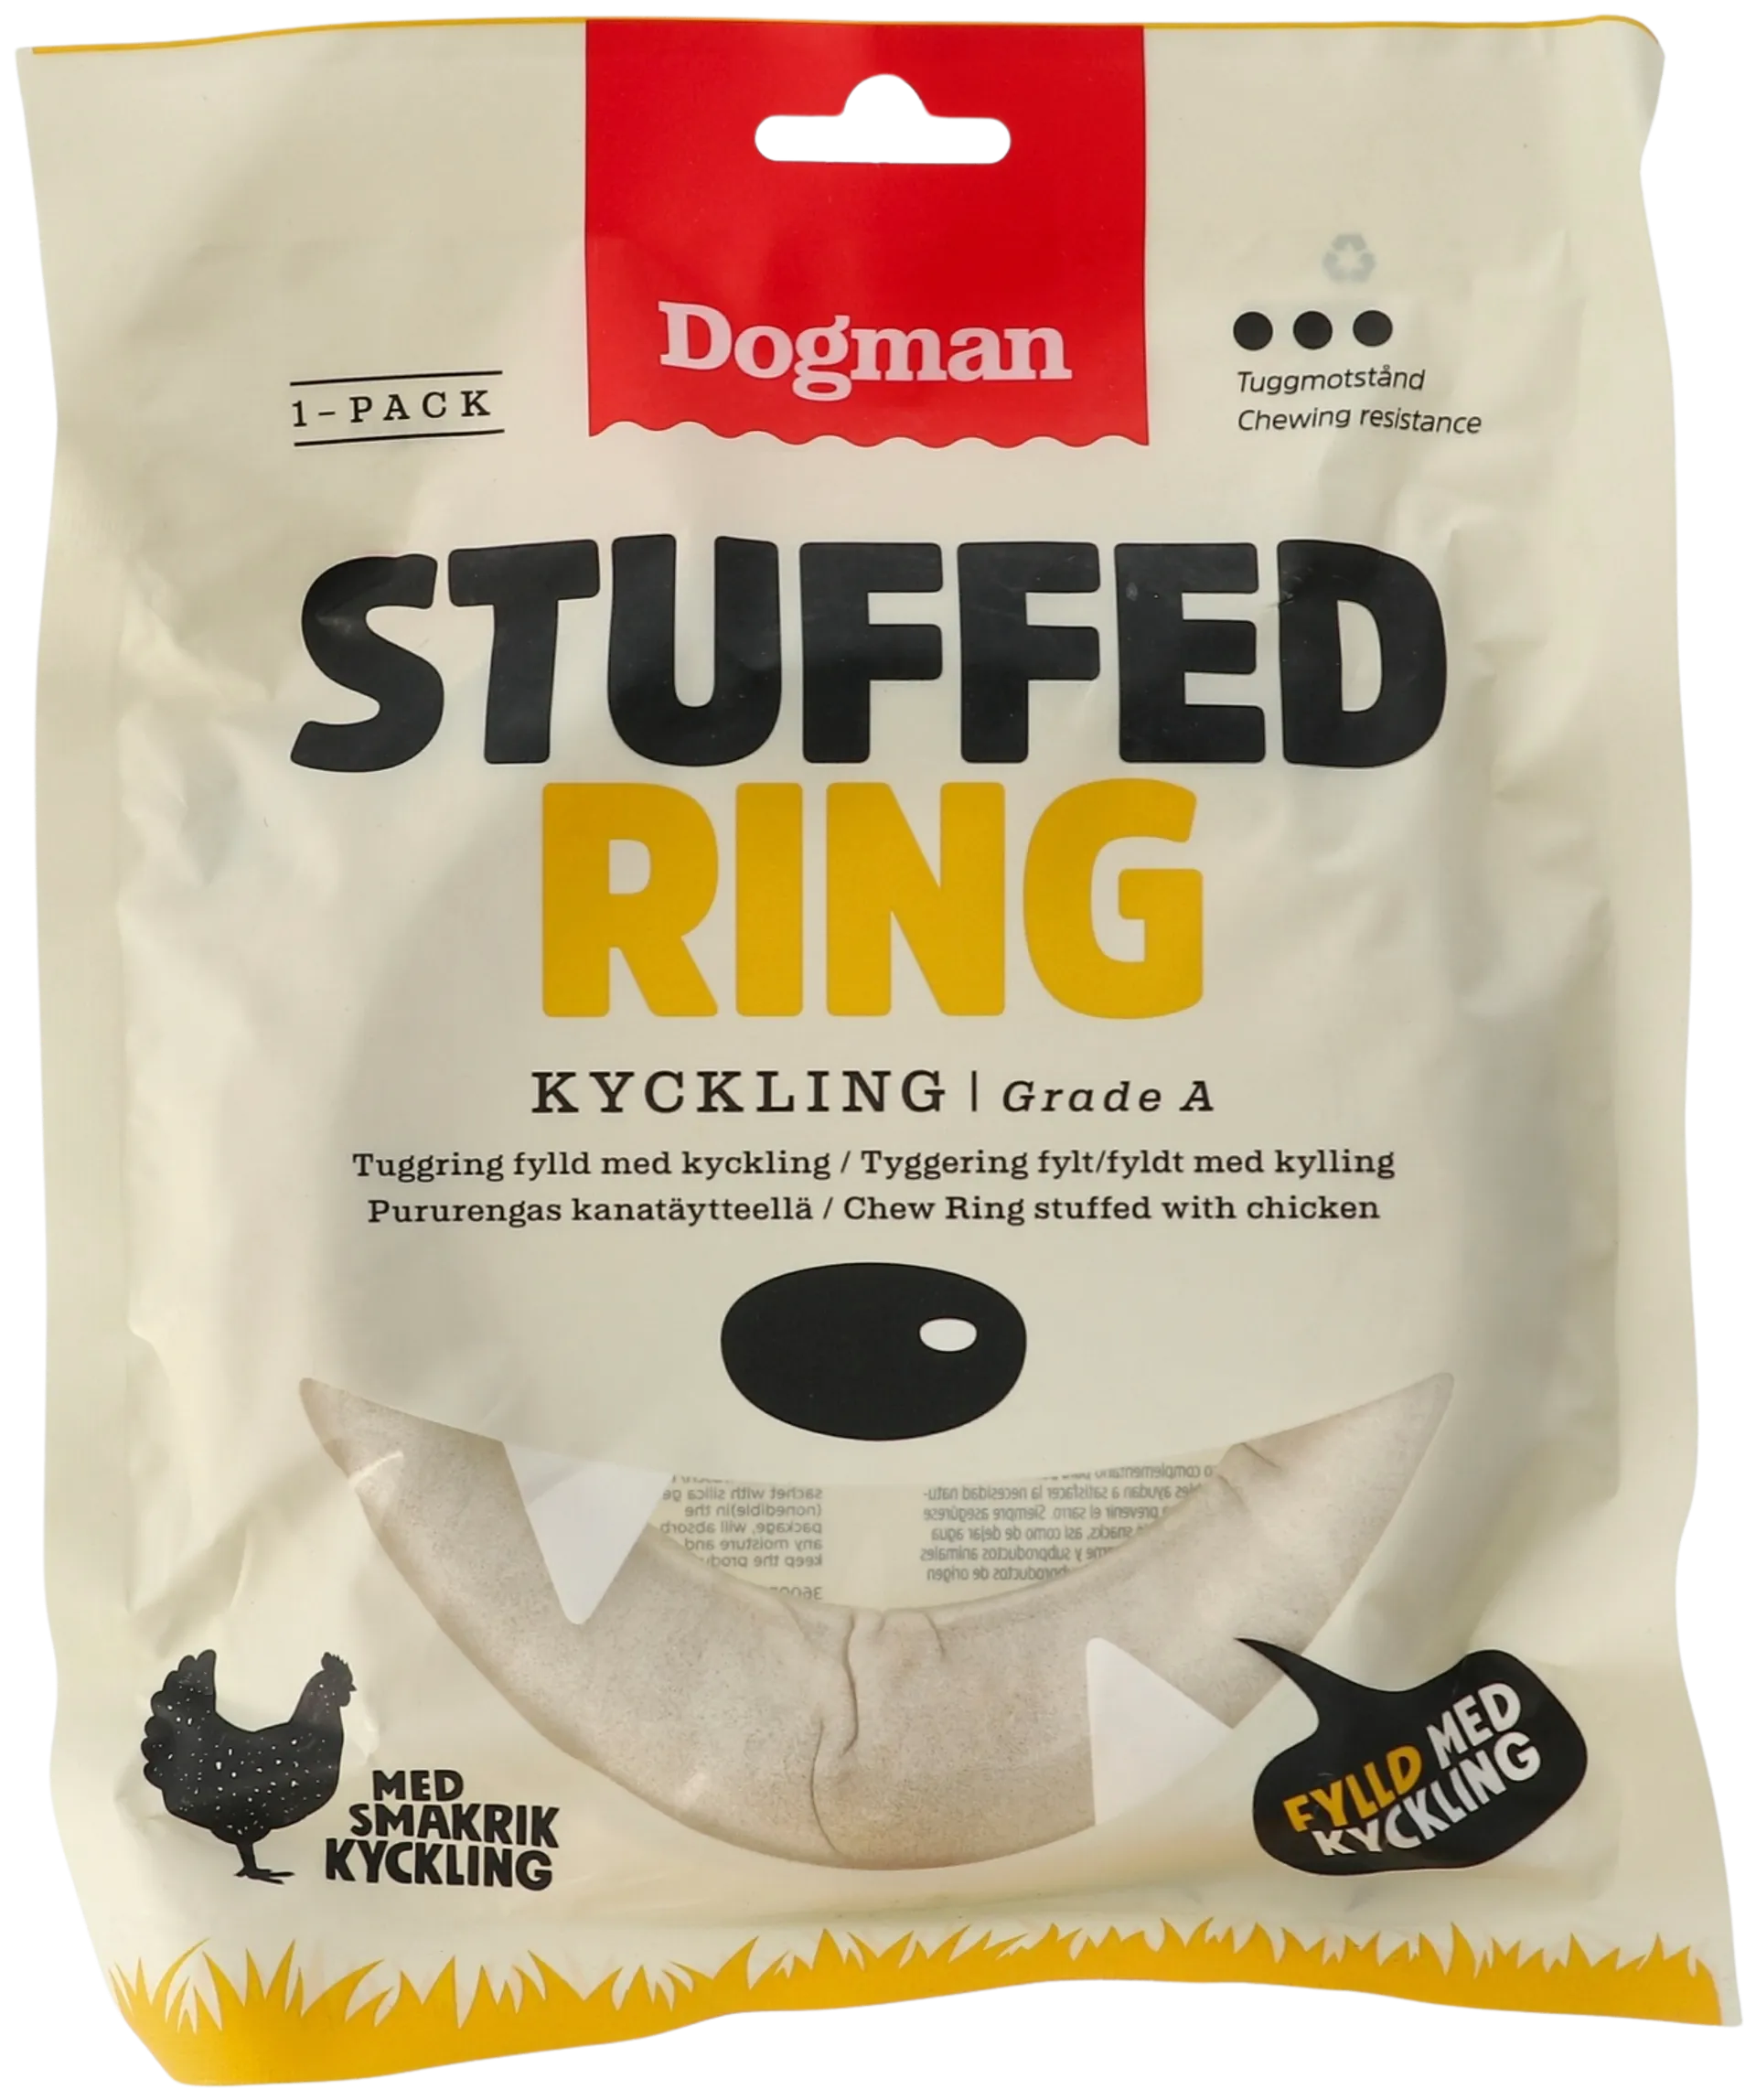 Dogman Chicken stuffed ring 15cm 1-pack 180g - 1